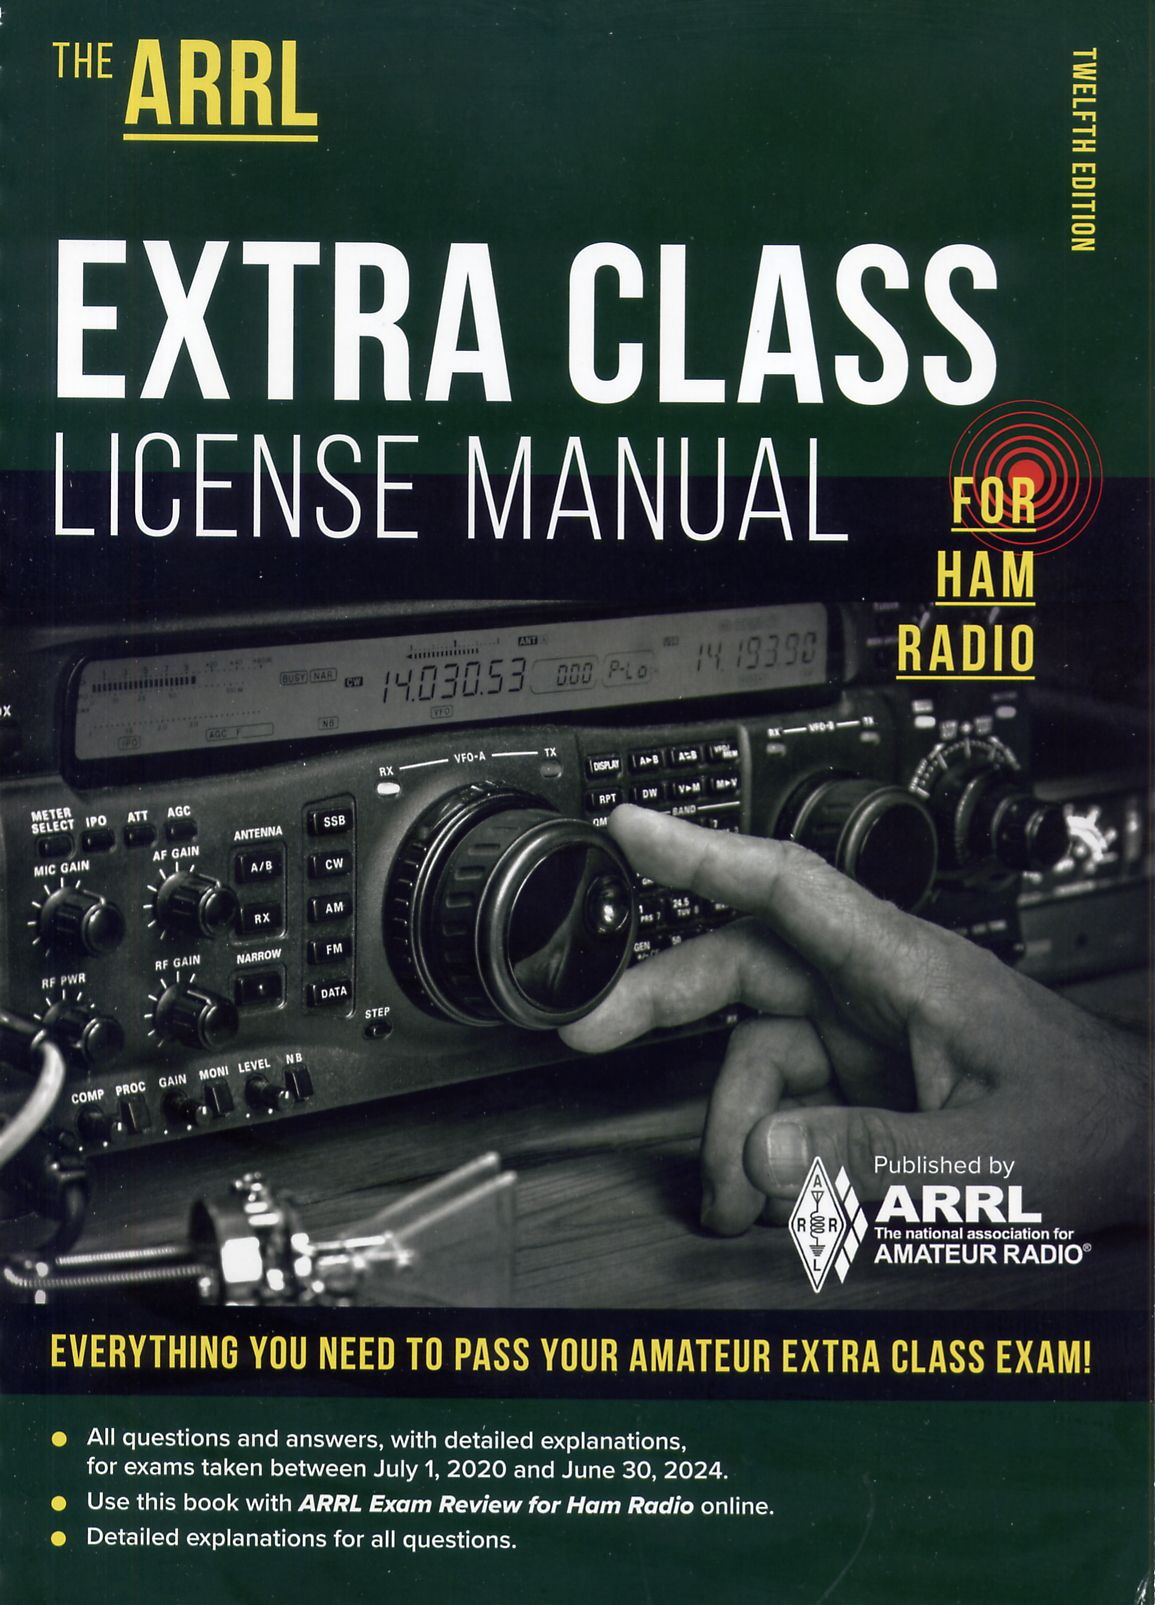 The ARRL Amateur Extra Class License Manual - Twelfth_Edition - 2020-2024